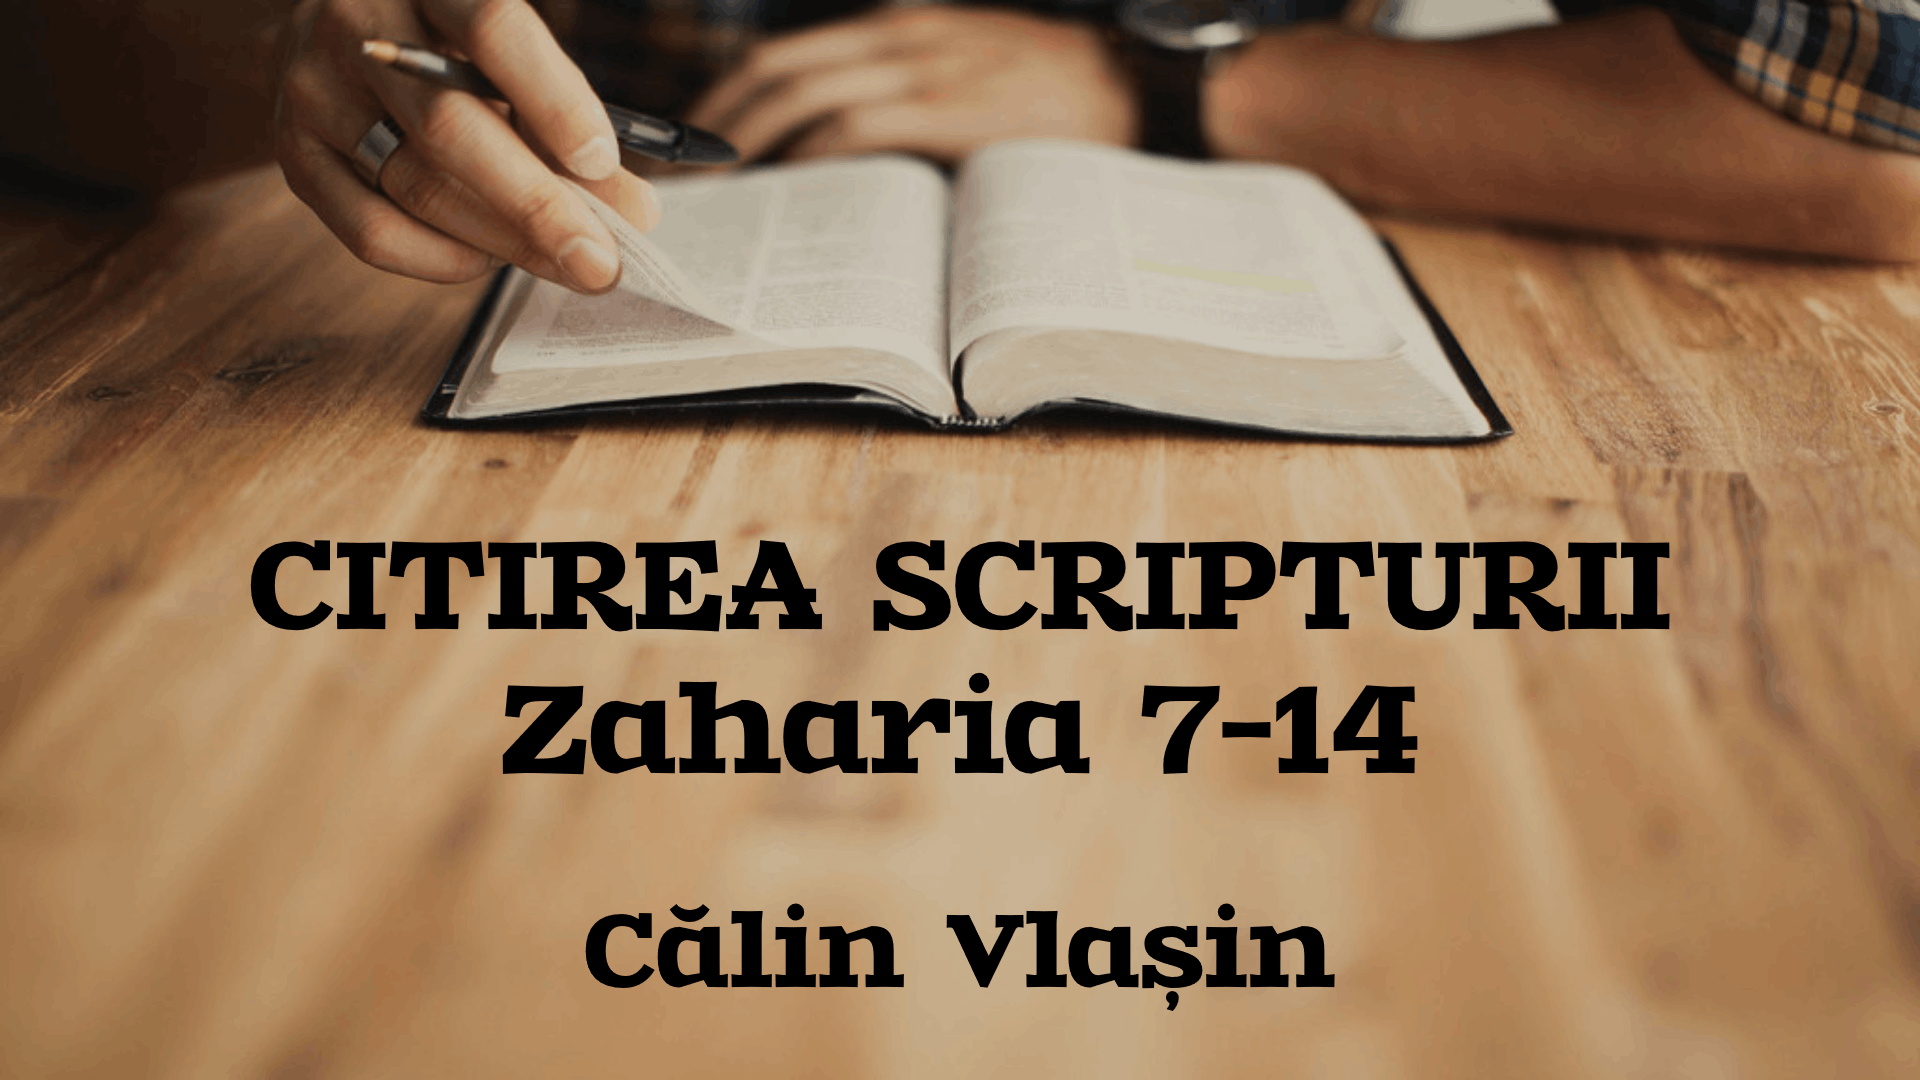 Citirea Scripturii - Zaharia 7-14 - Calin Vlasin